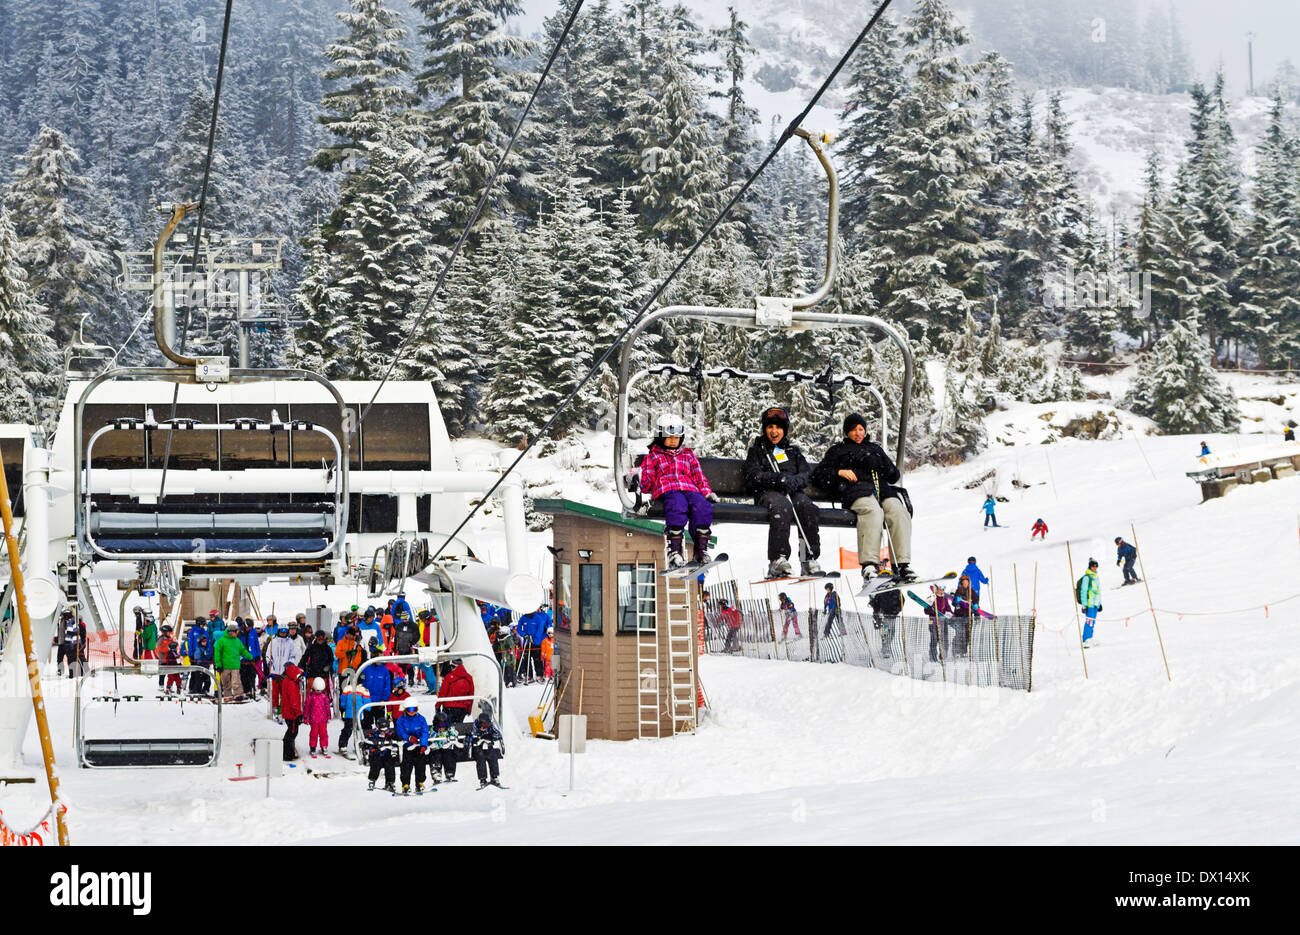 skiiers-on-the-ski-lift-on-grouse-mounta